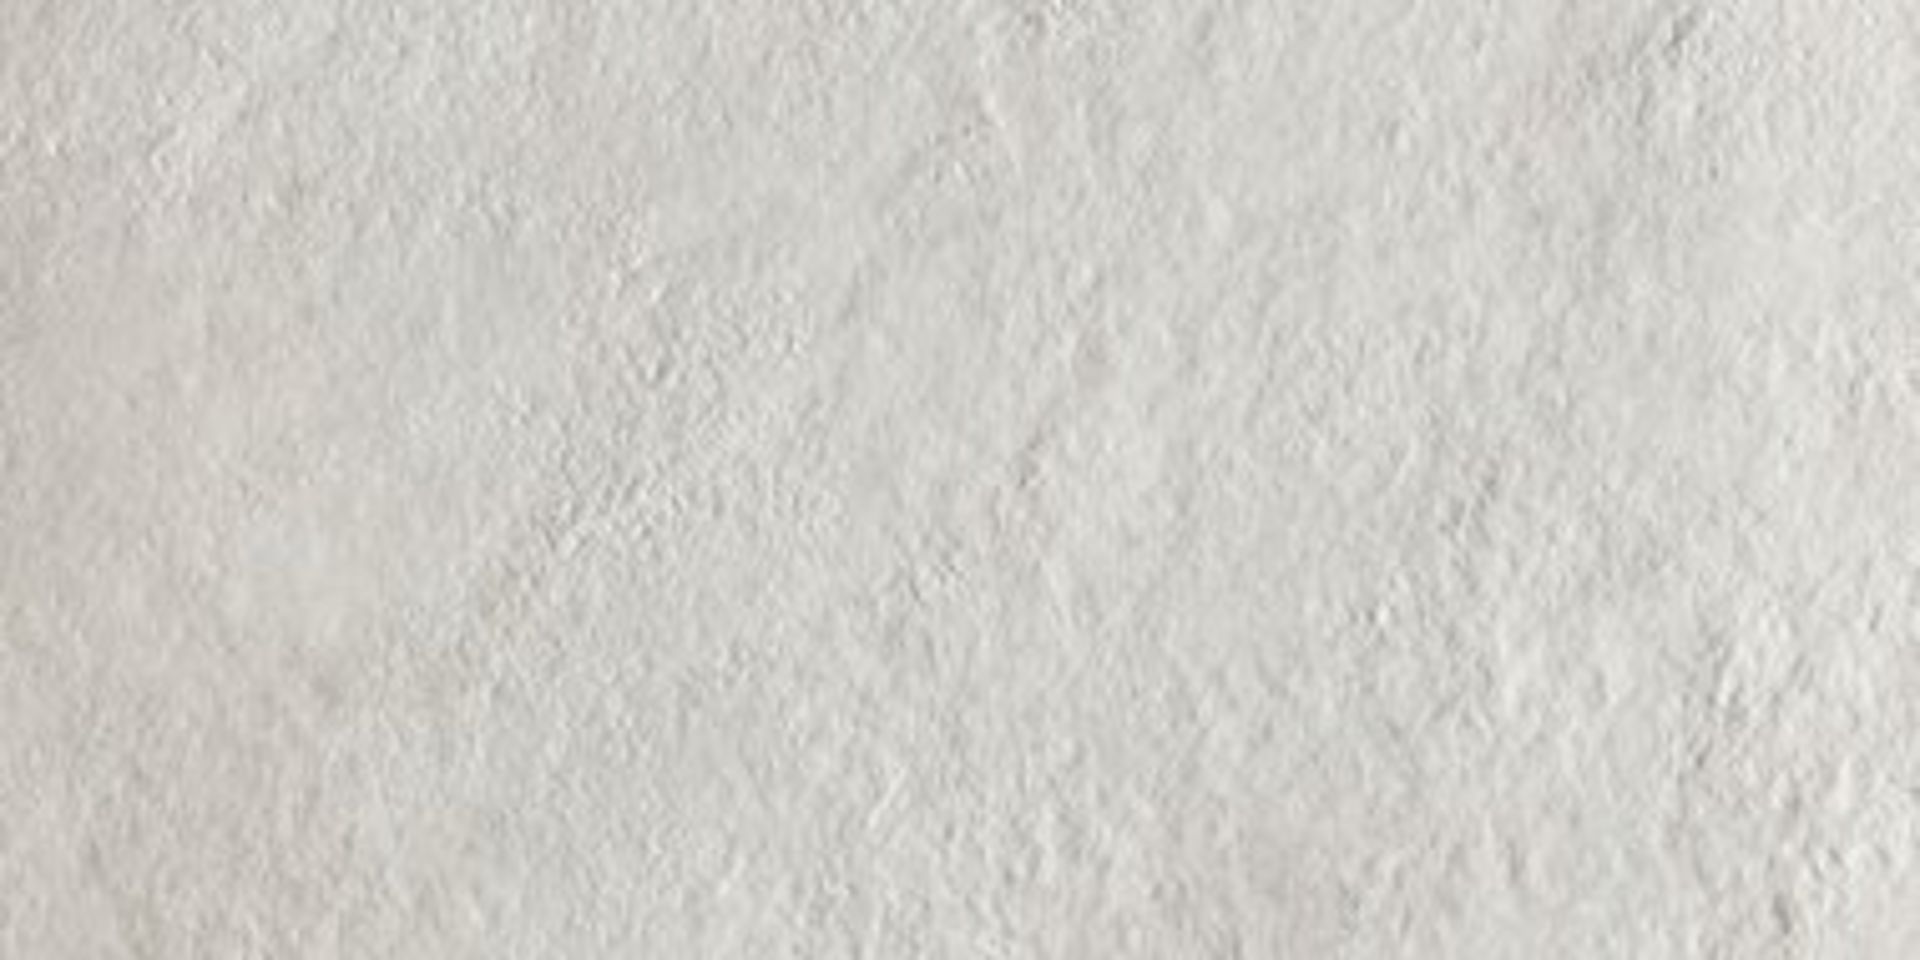 6 x Boxes of RAK Porcelain Floor or Wall Tiles - Concrete Sand Design Design in Beige - 30 x 60 cm